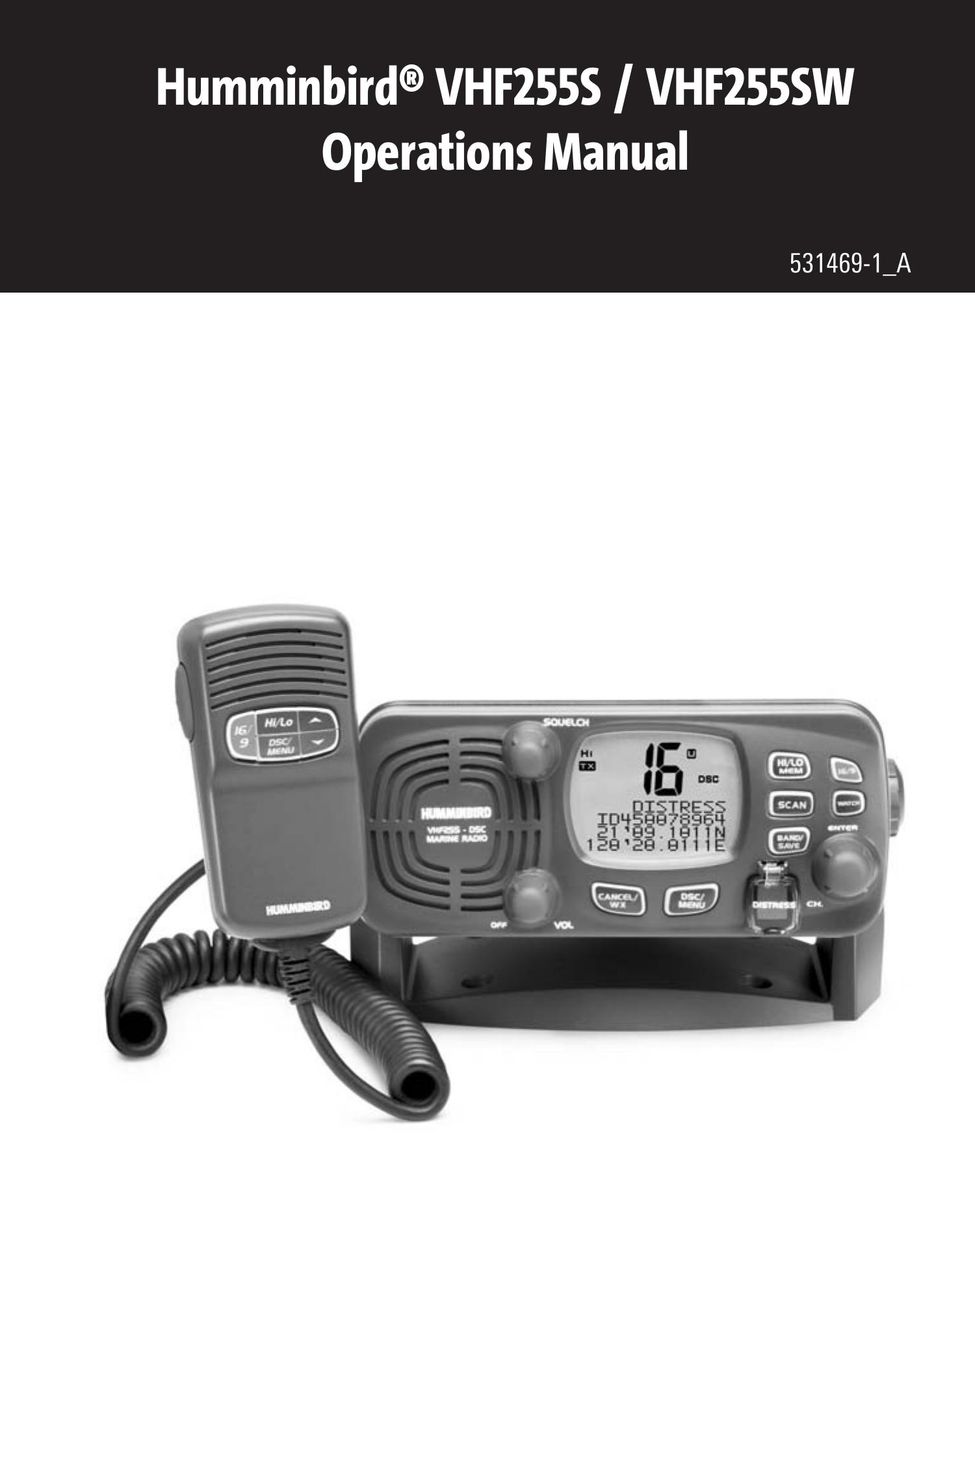 Humminbird VHF255S Two-Way Radio User Manual